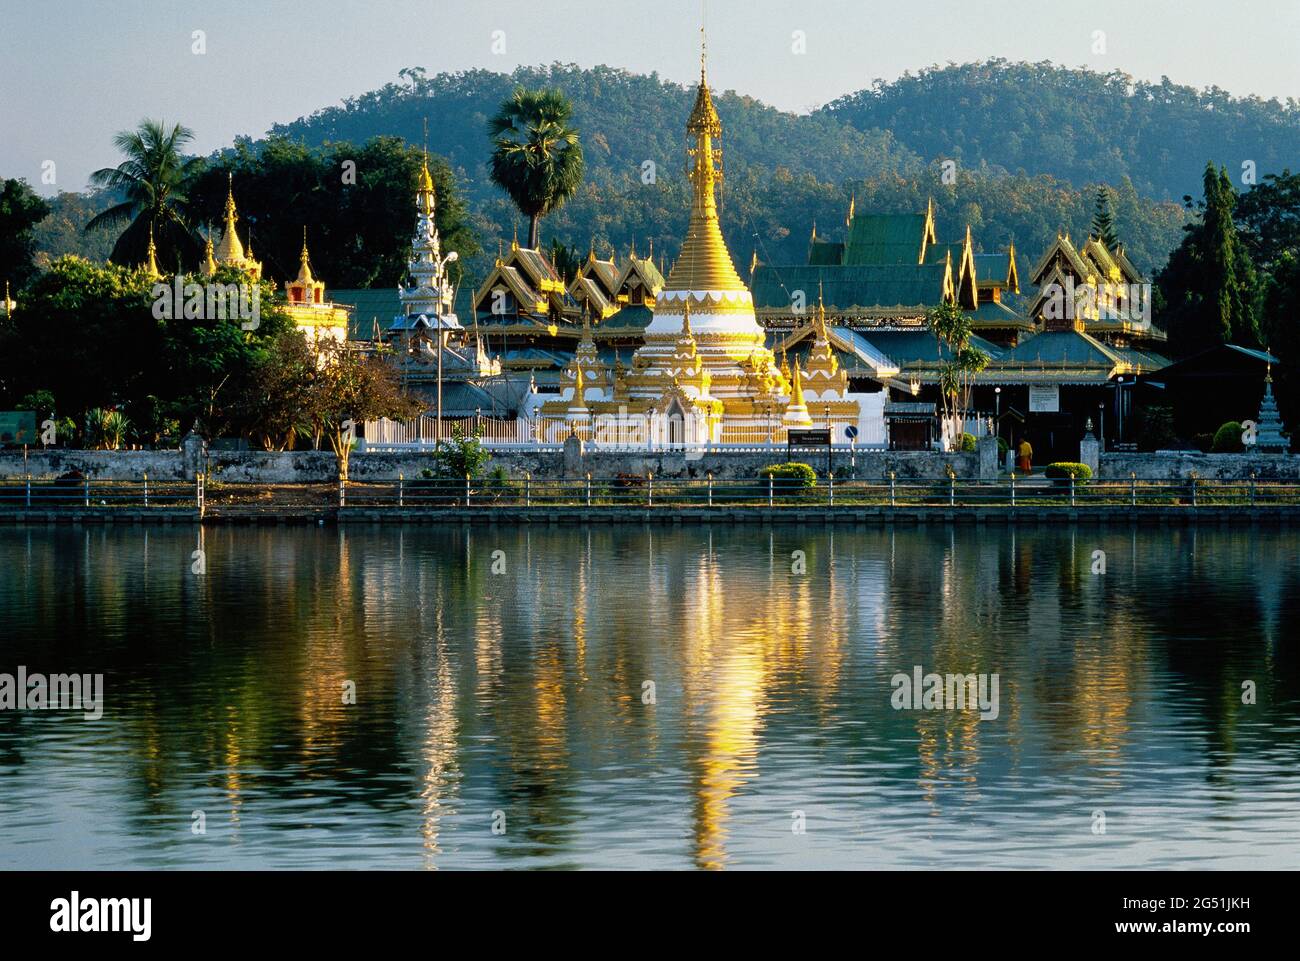 Wat Jong Klang temple on lakeshore, Mae Hong Son Province, Thailand Stock Photo